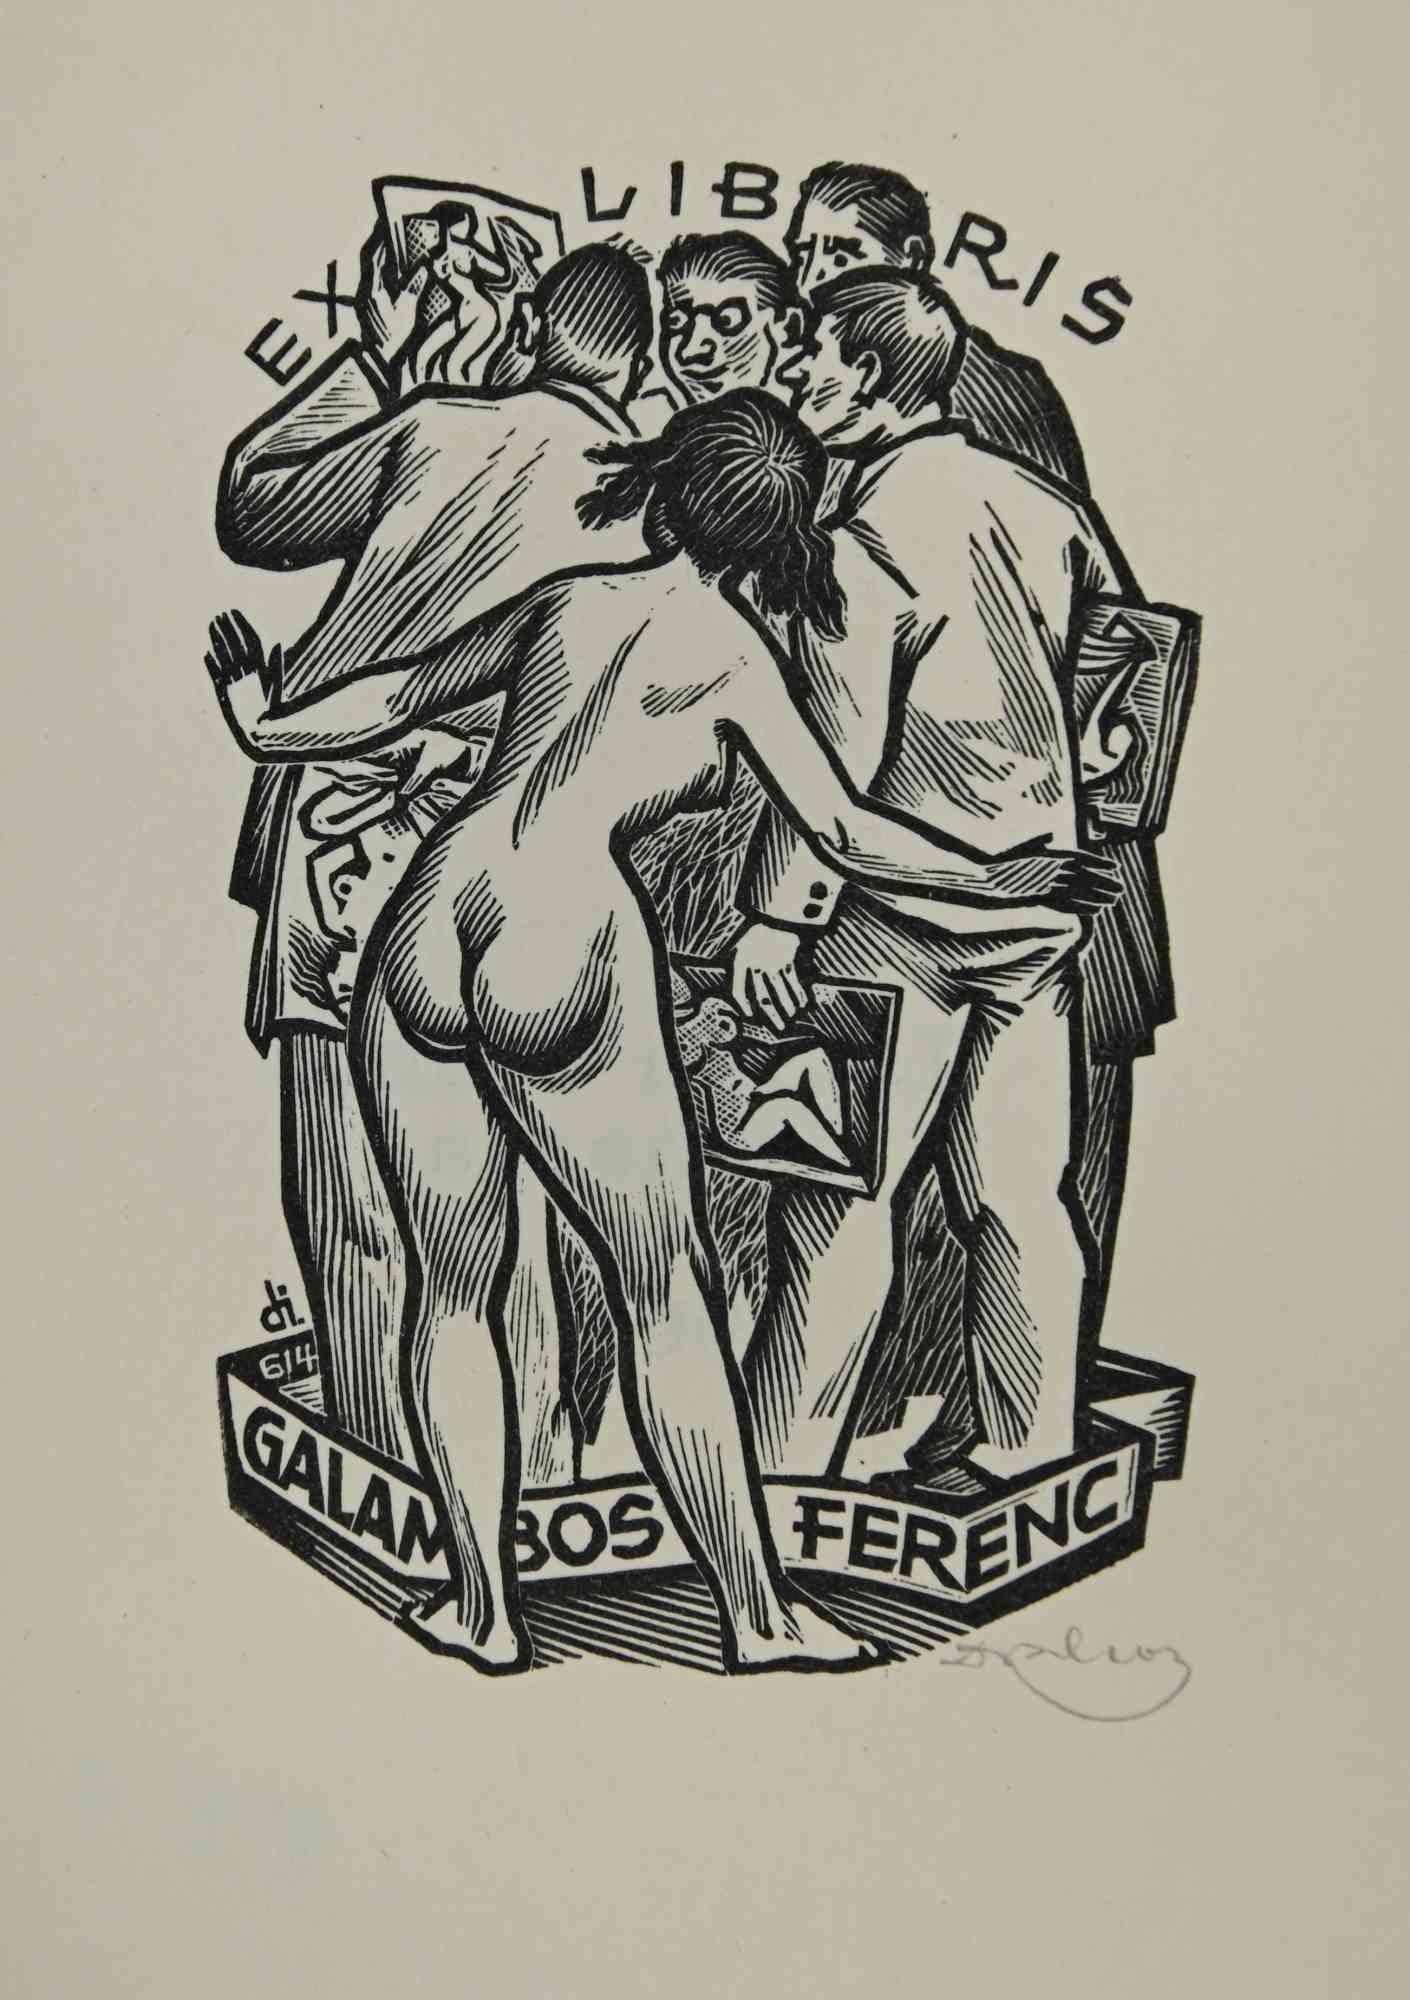 Unknown Figurative Print - Ex-Libris - Galambos Ferenc - Woodcut - Mid 20th Century